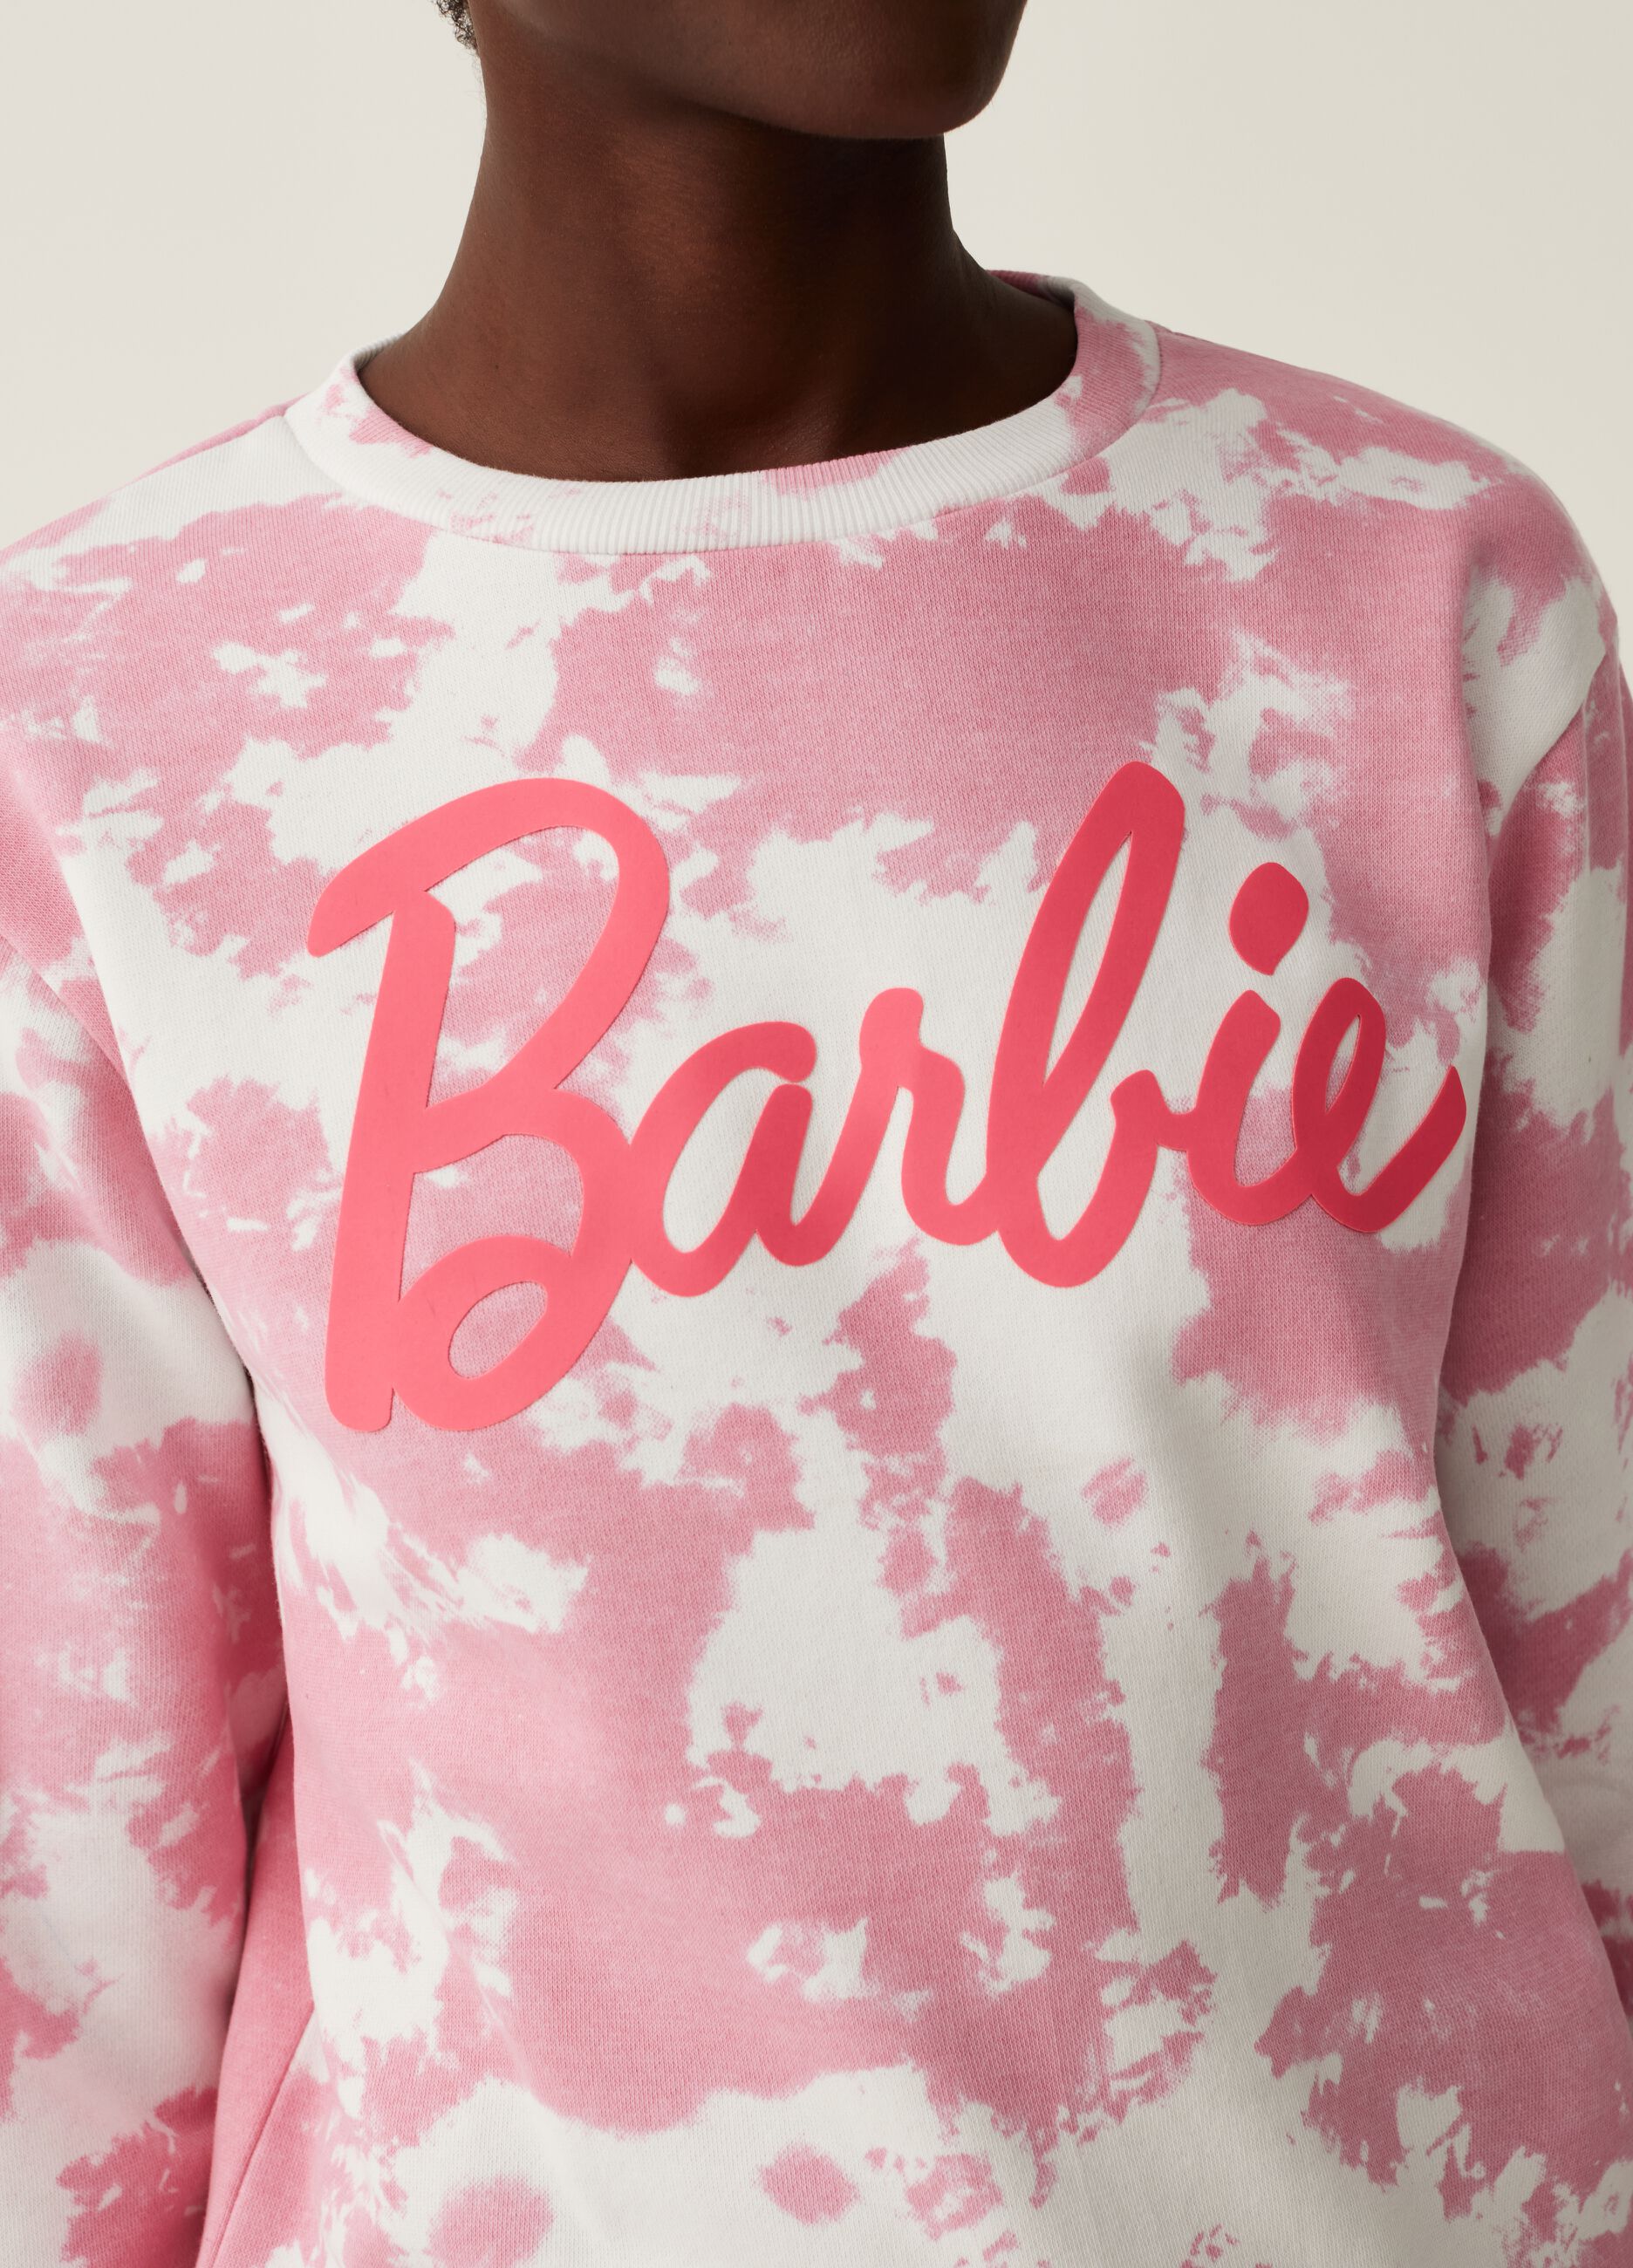 MATTEL Woman's White/Pink Tie-dye sweatshirt with Barbie™ print